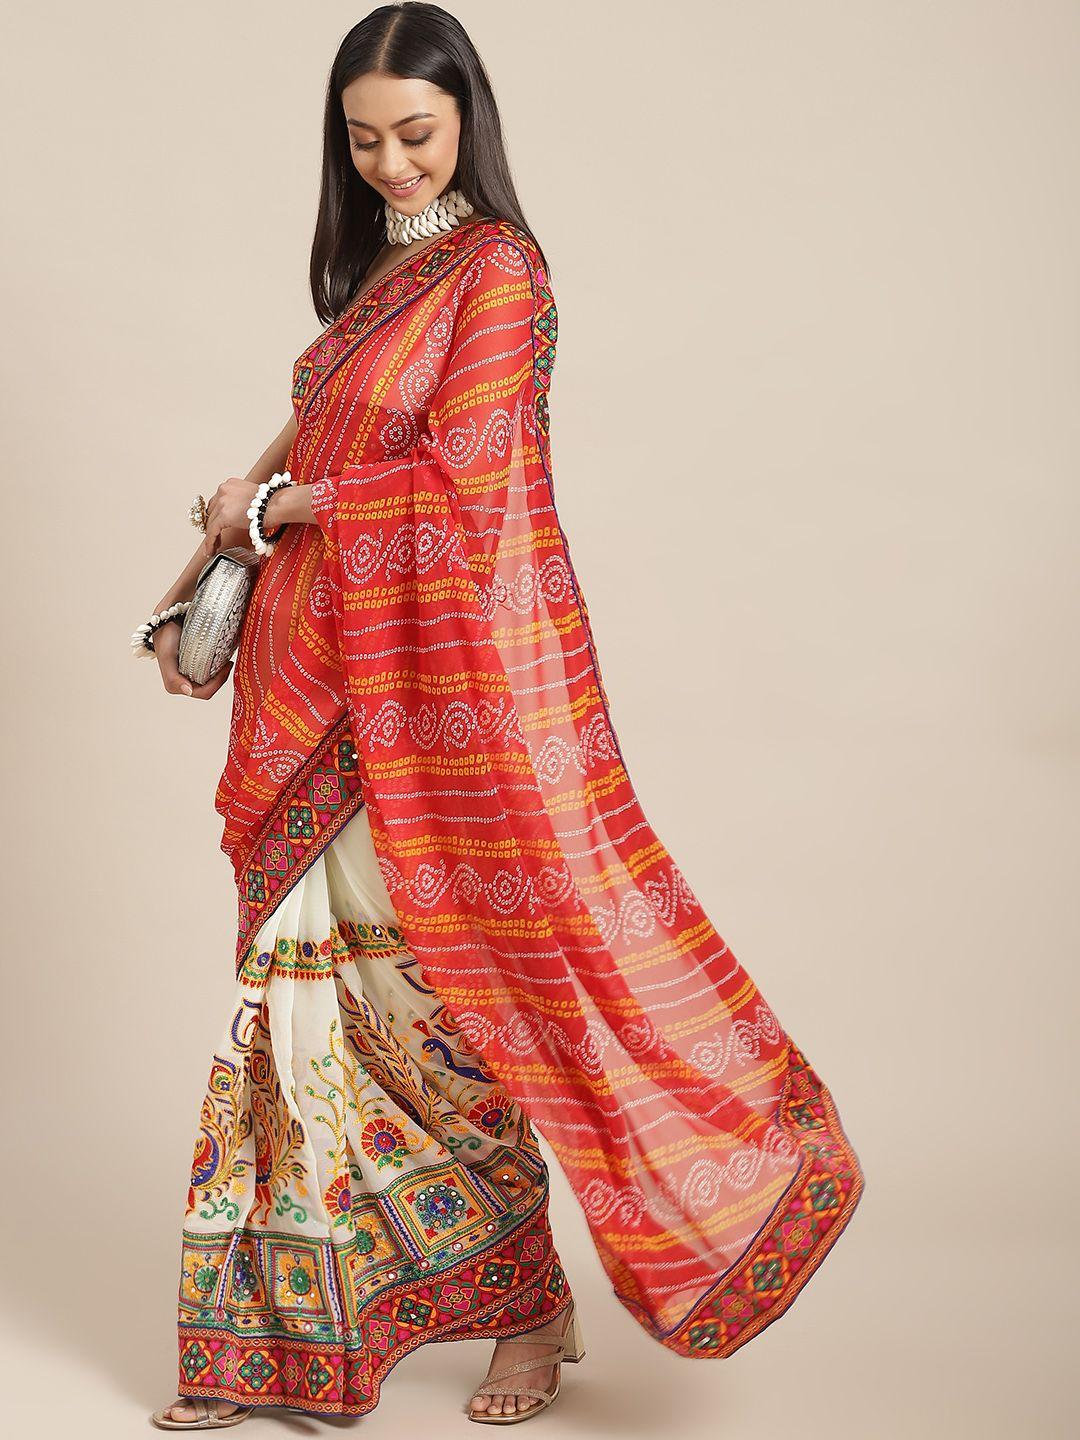 rajgranth red & white ethnic motifs embroidered half and half bandhani saree